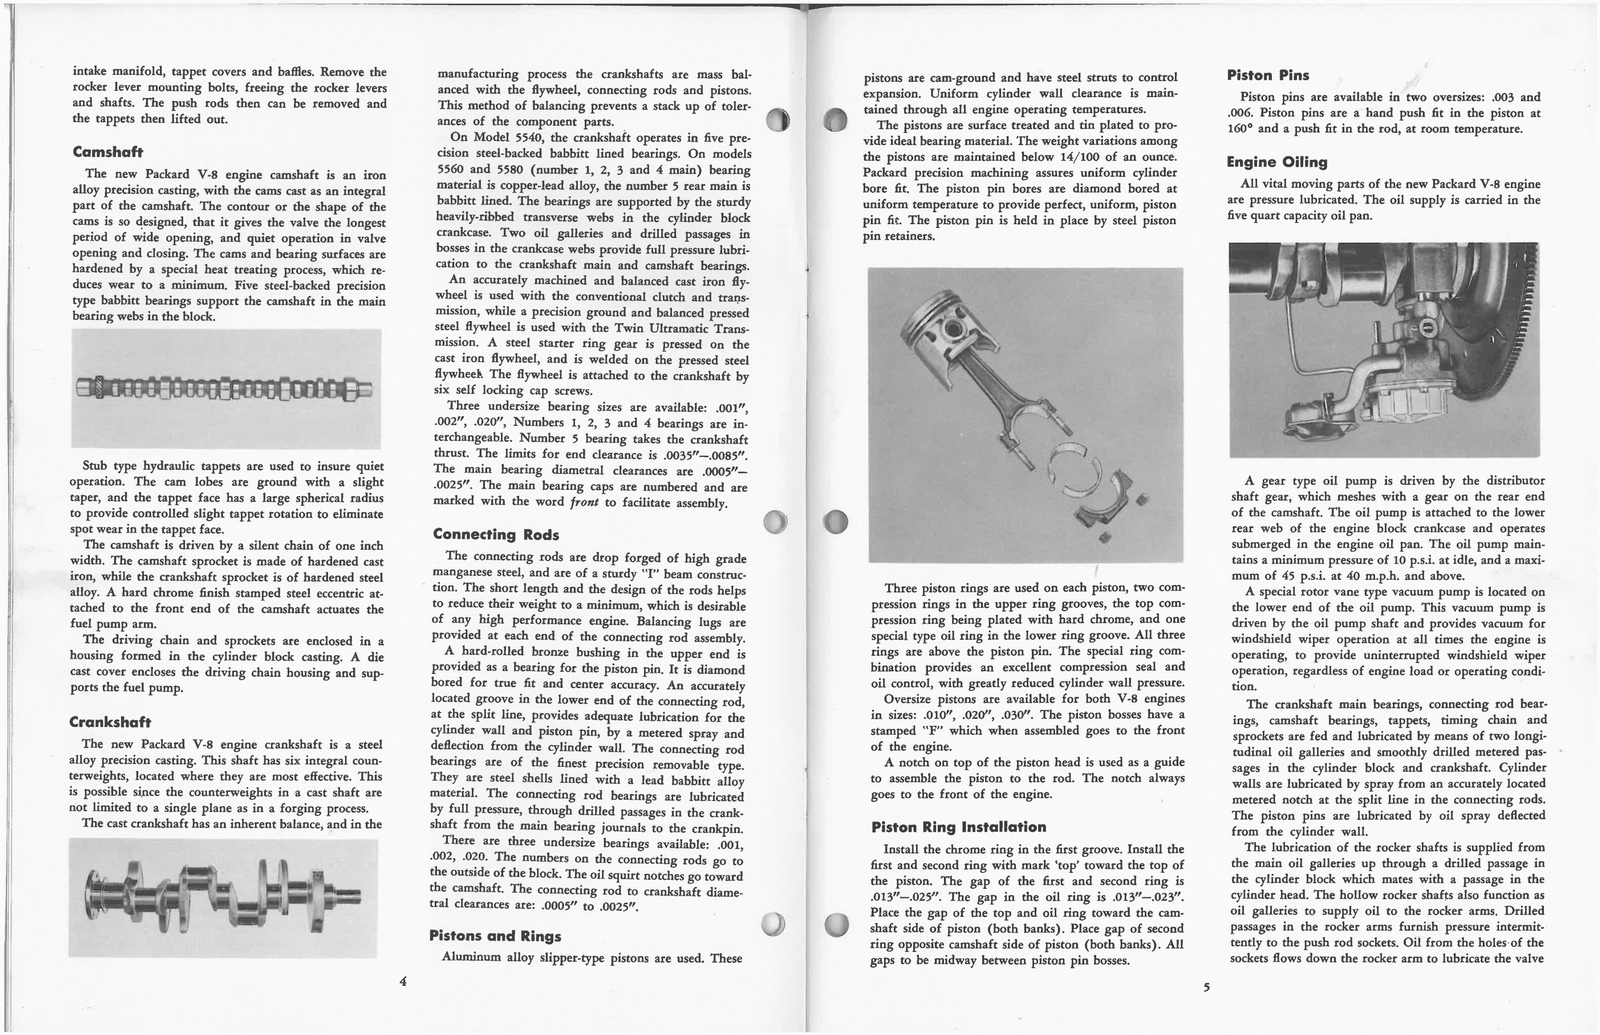 n_1955 Packard Sevicemens Training Book-04-05.jpg